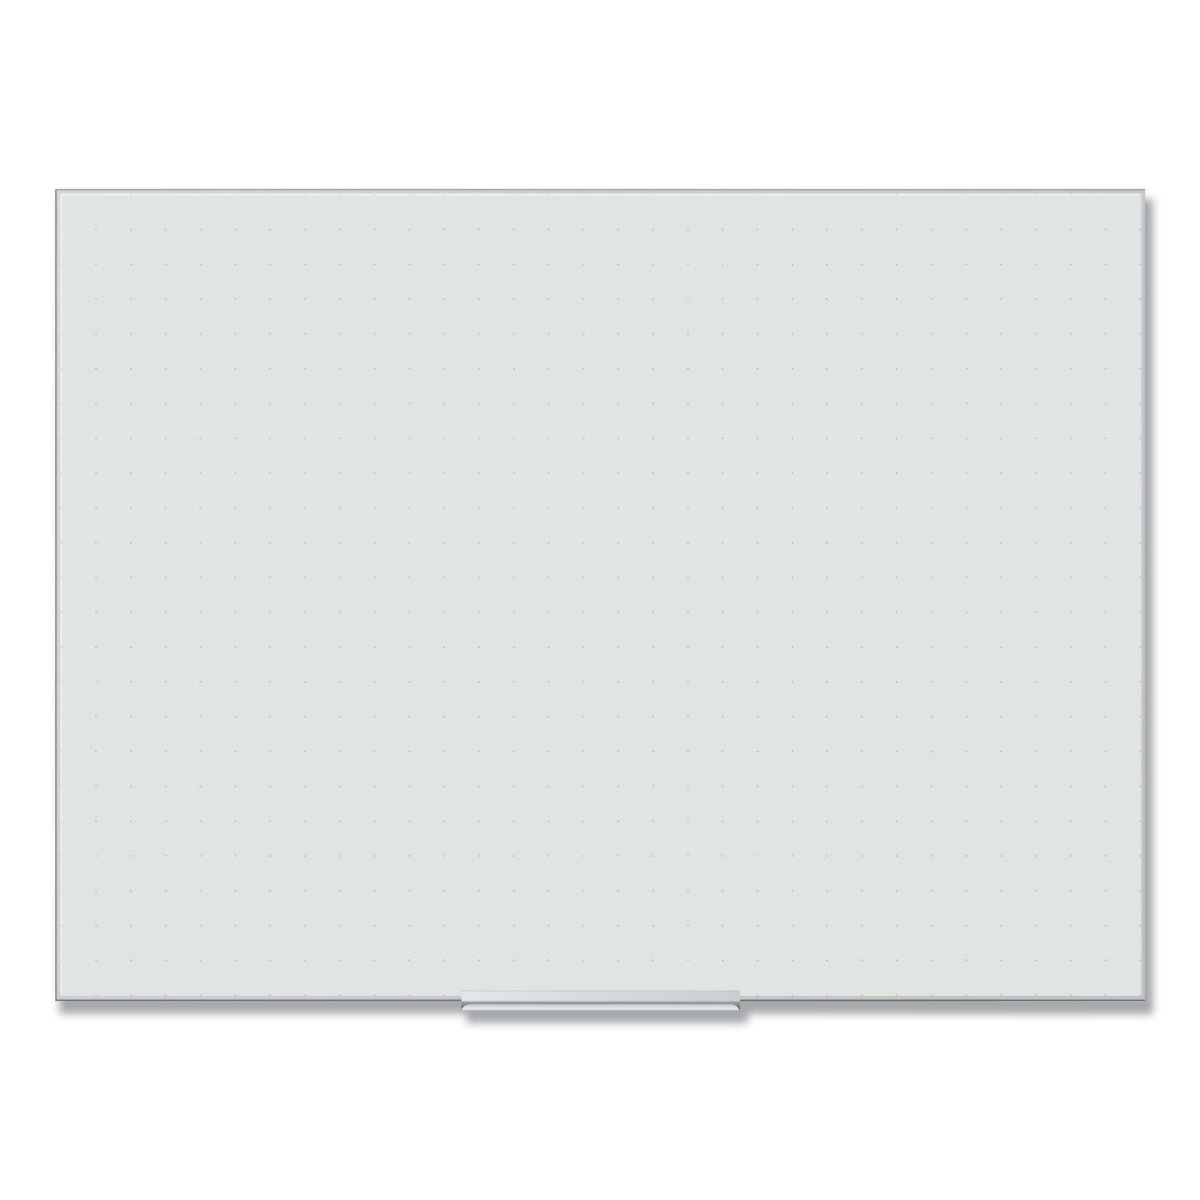 Ubrands Ubr2799u0001 47 X 35 In. Grid Glass Dry Erase Board White